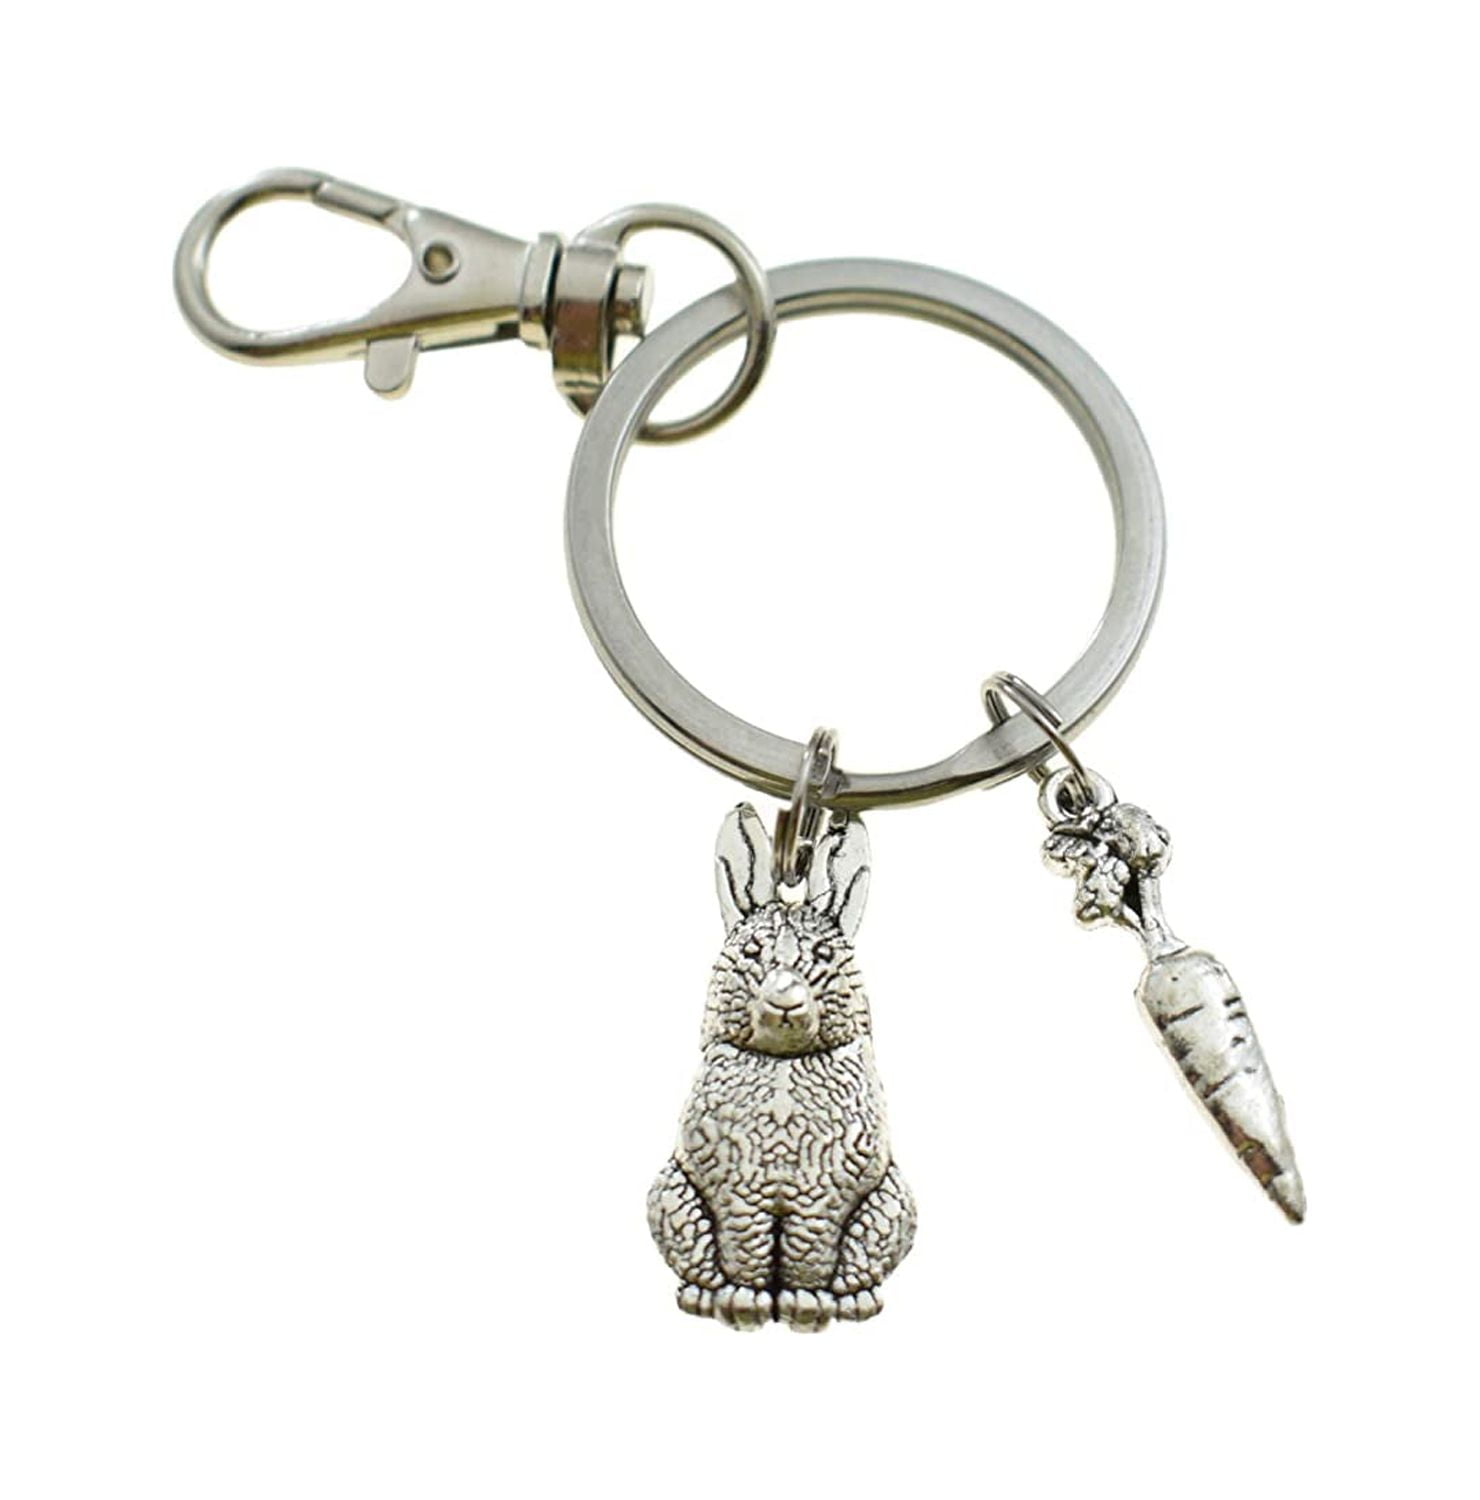 KEYCHAIN Rose Gold Carabiner Swivel Key Ring Lucky Charm Gift Idea Charm  for Keys Bag Charm 